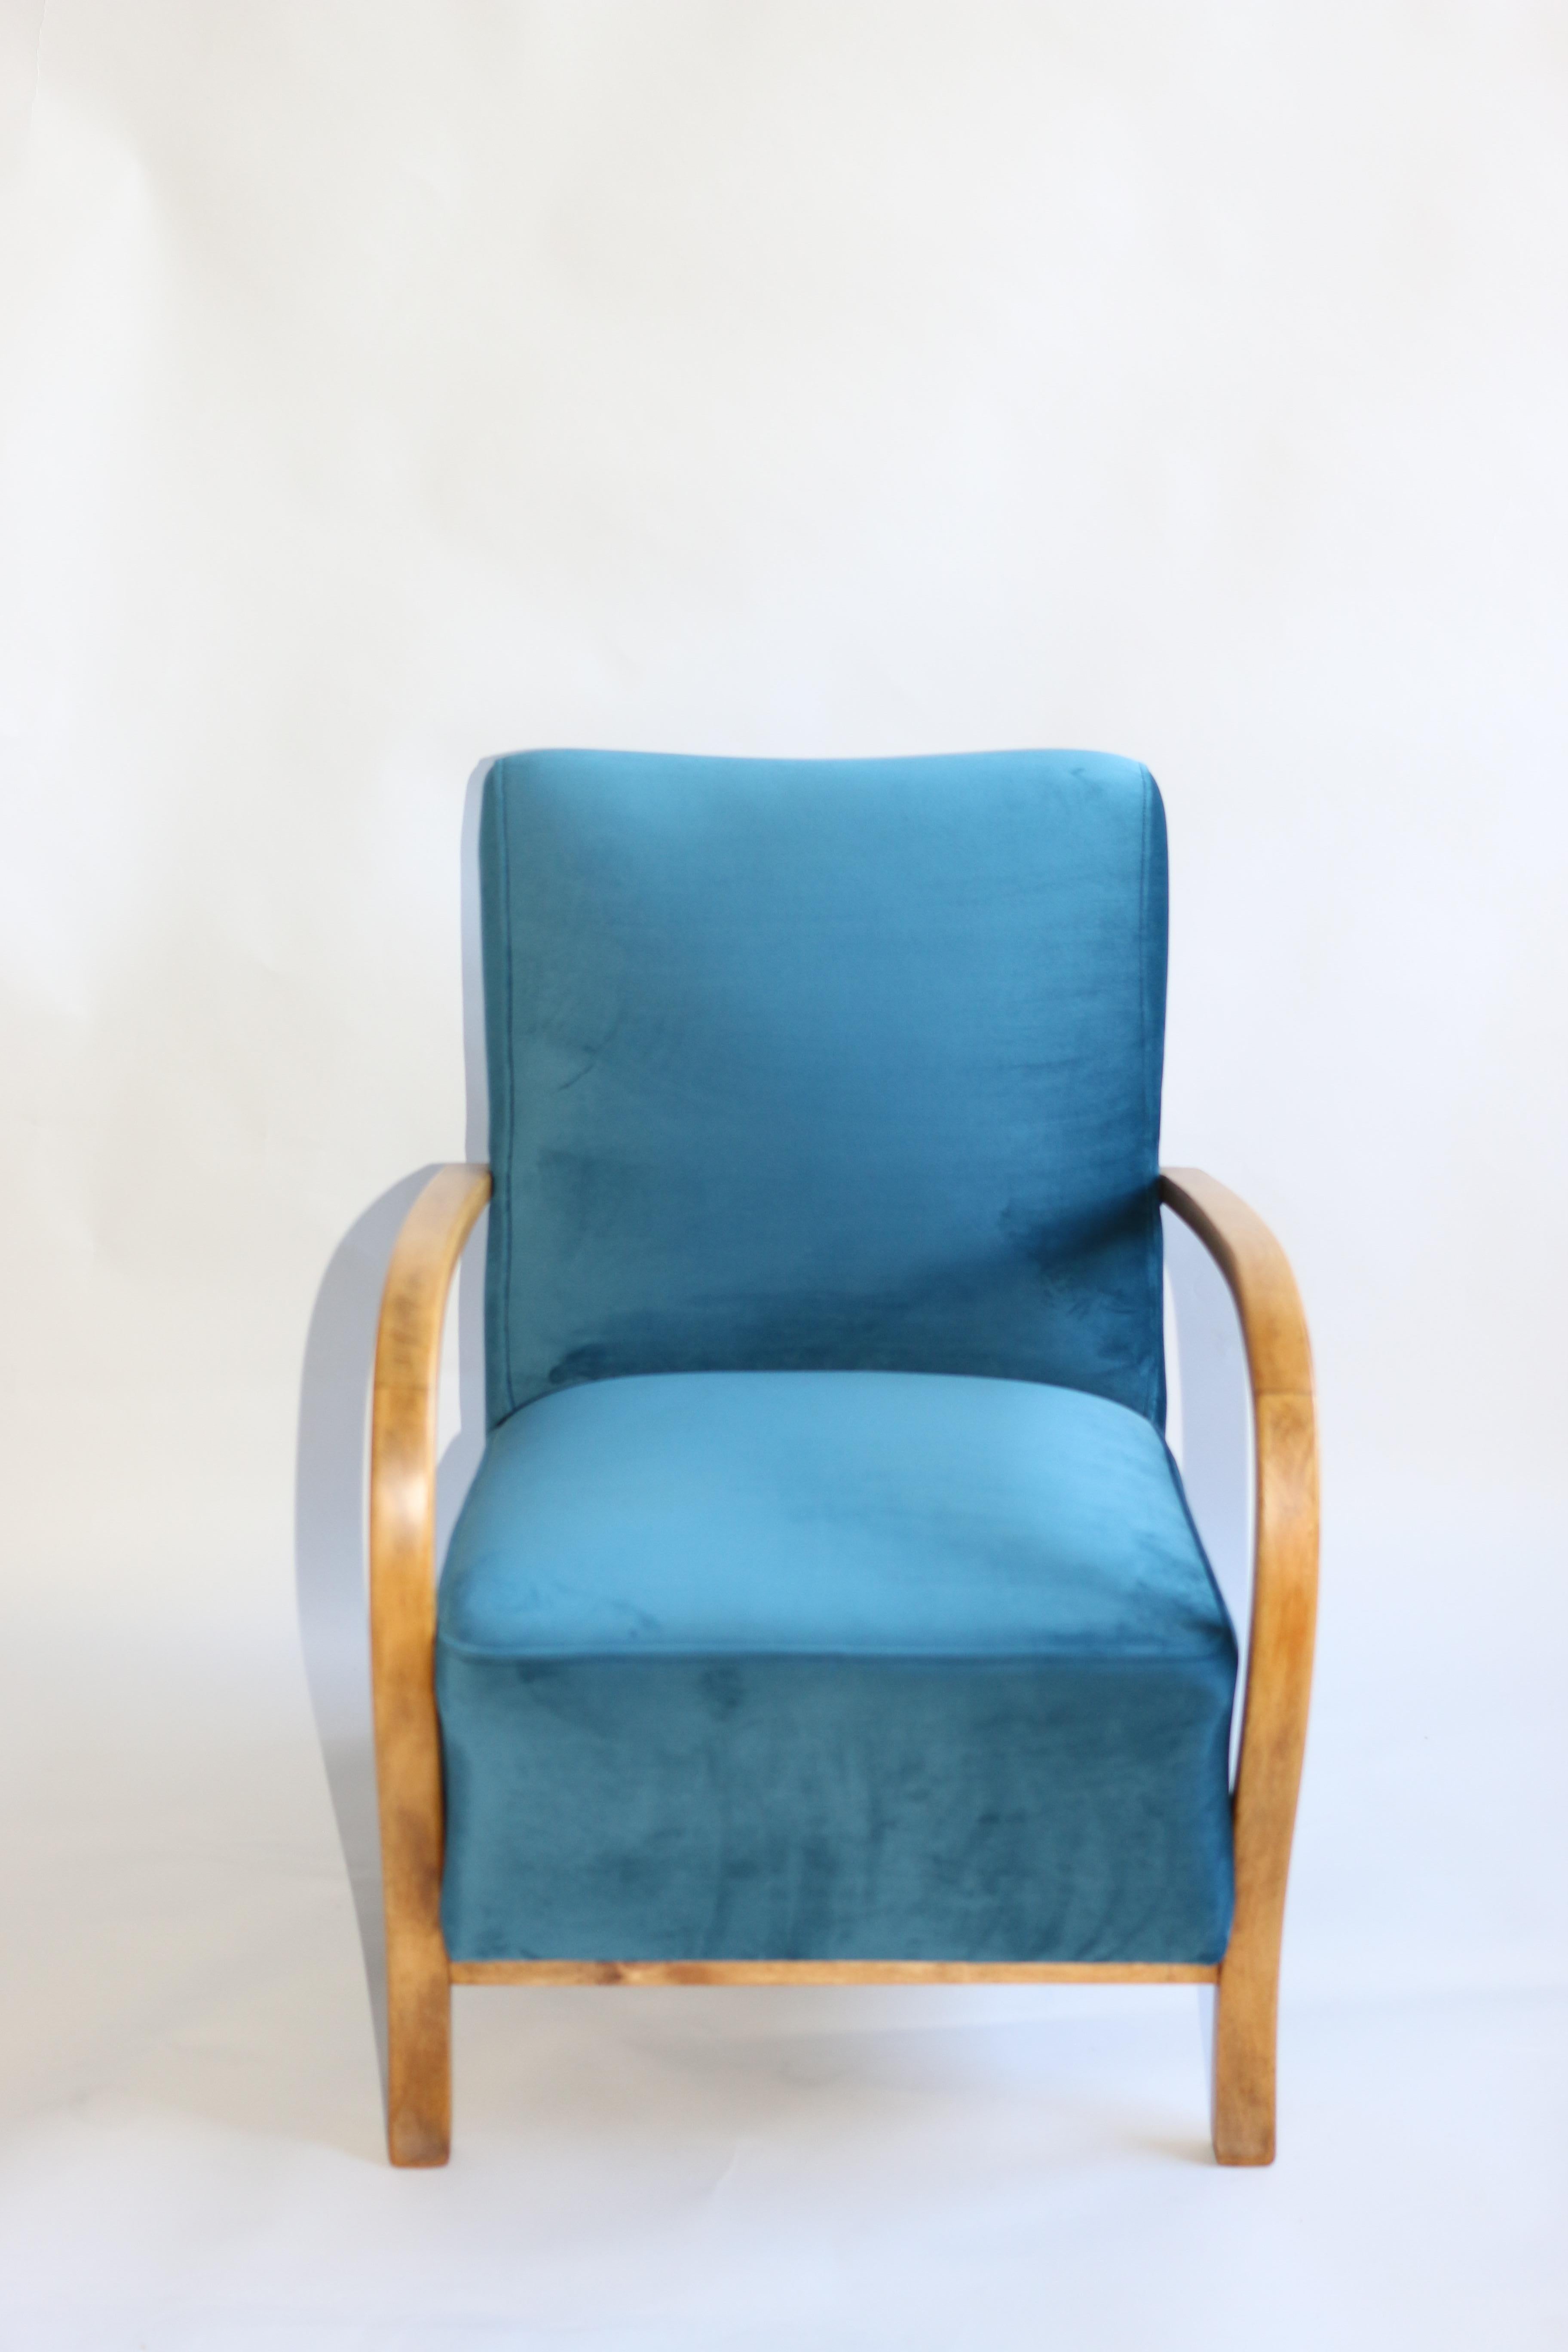 Art Deco Armchair in Blue Marine Velvet from 20th Century For Sale 1